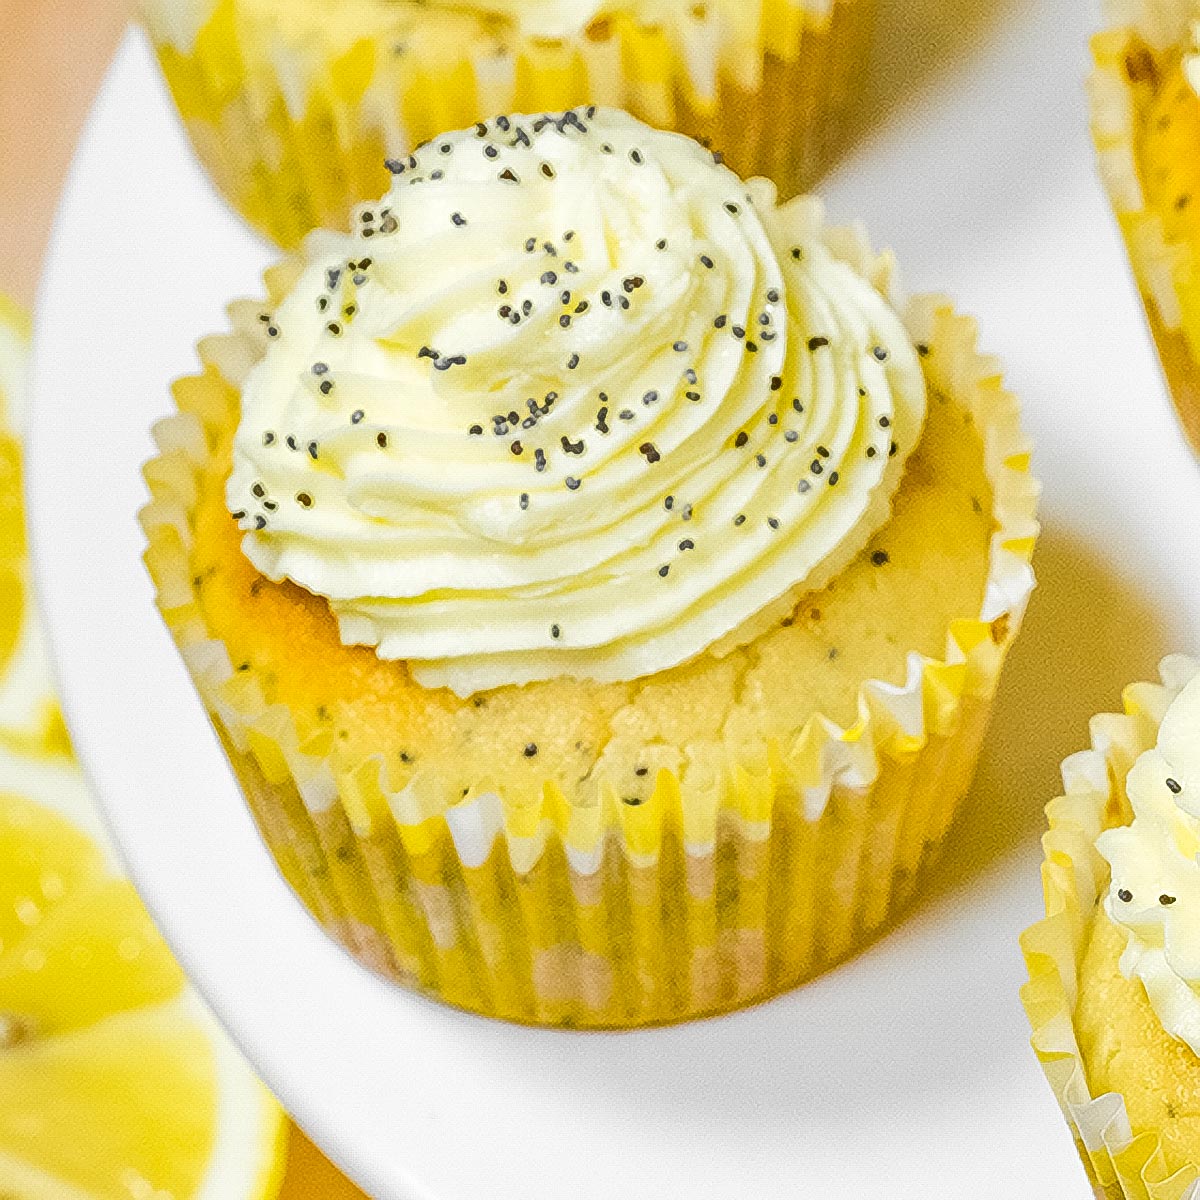 Lemon poppy seed muffins.